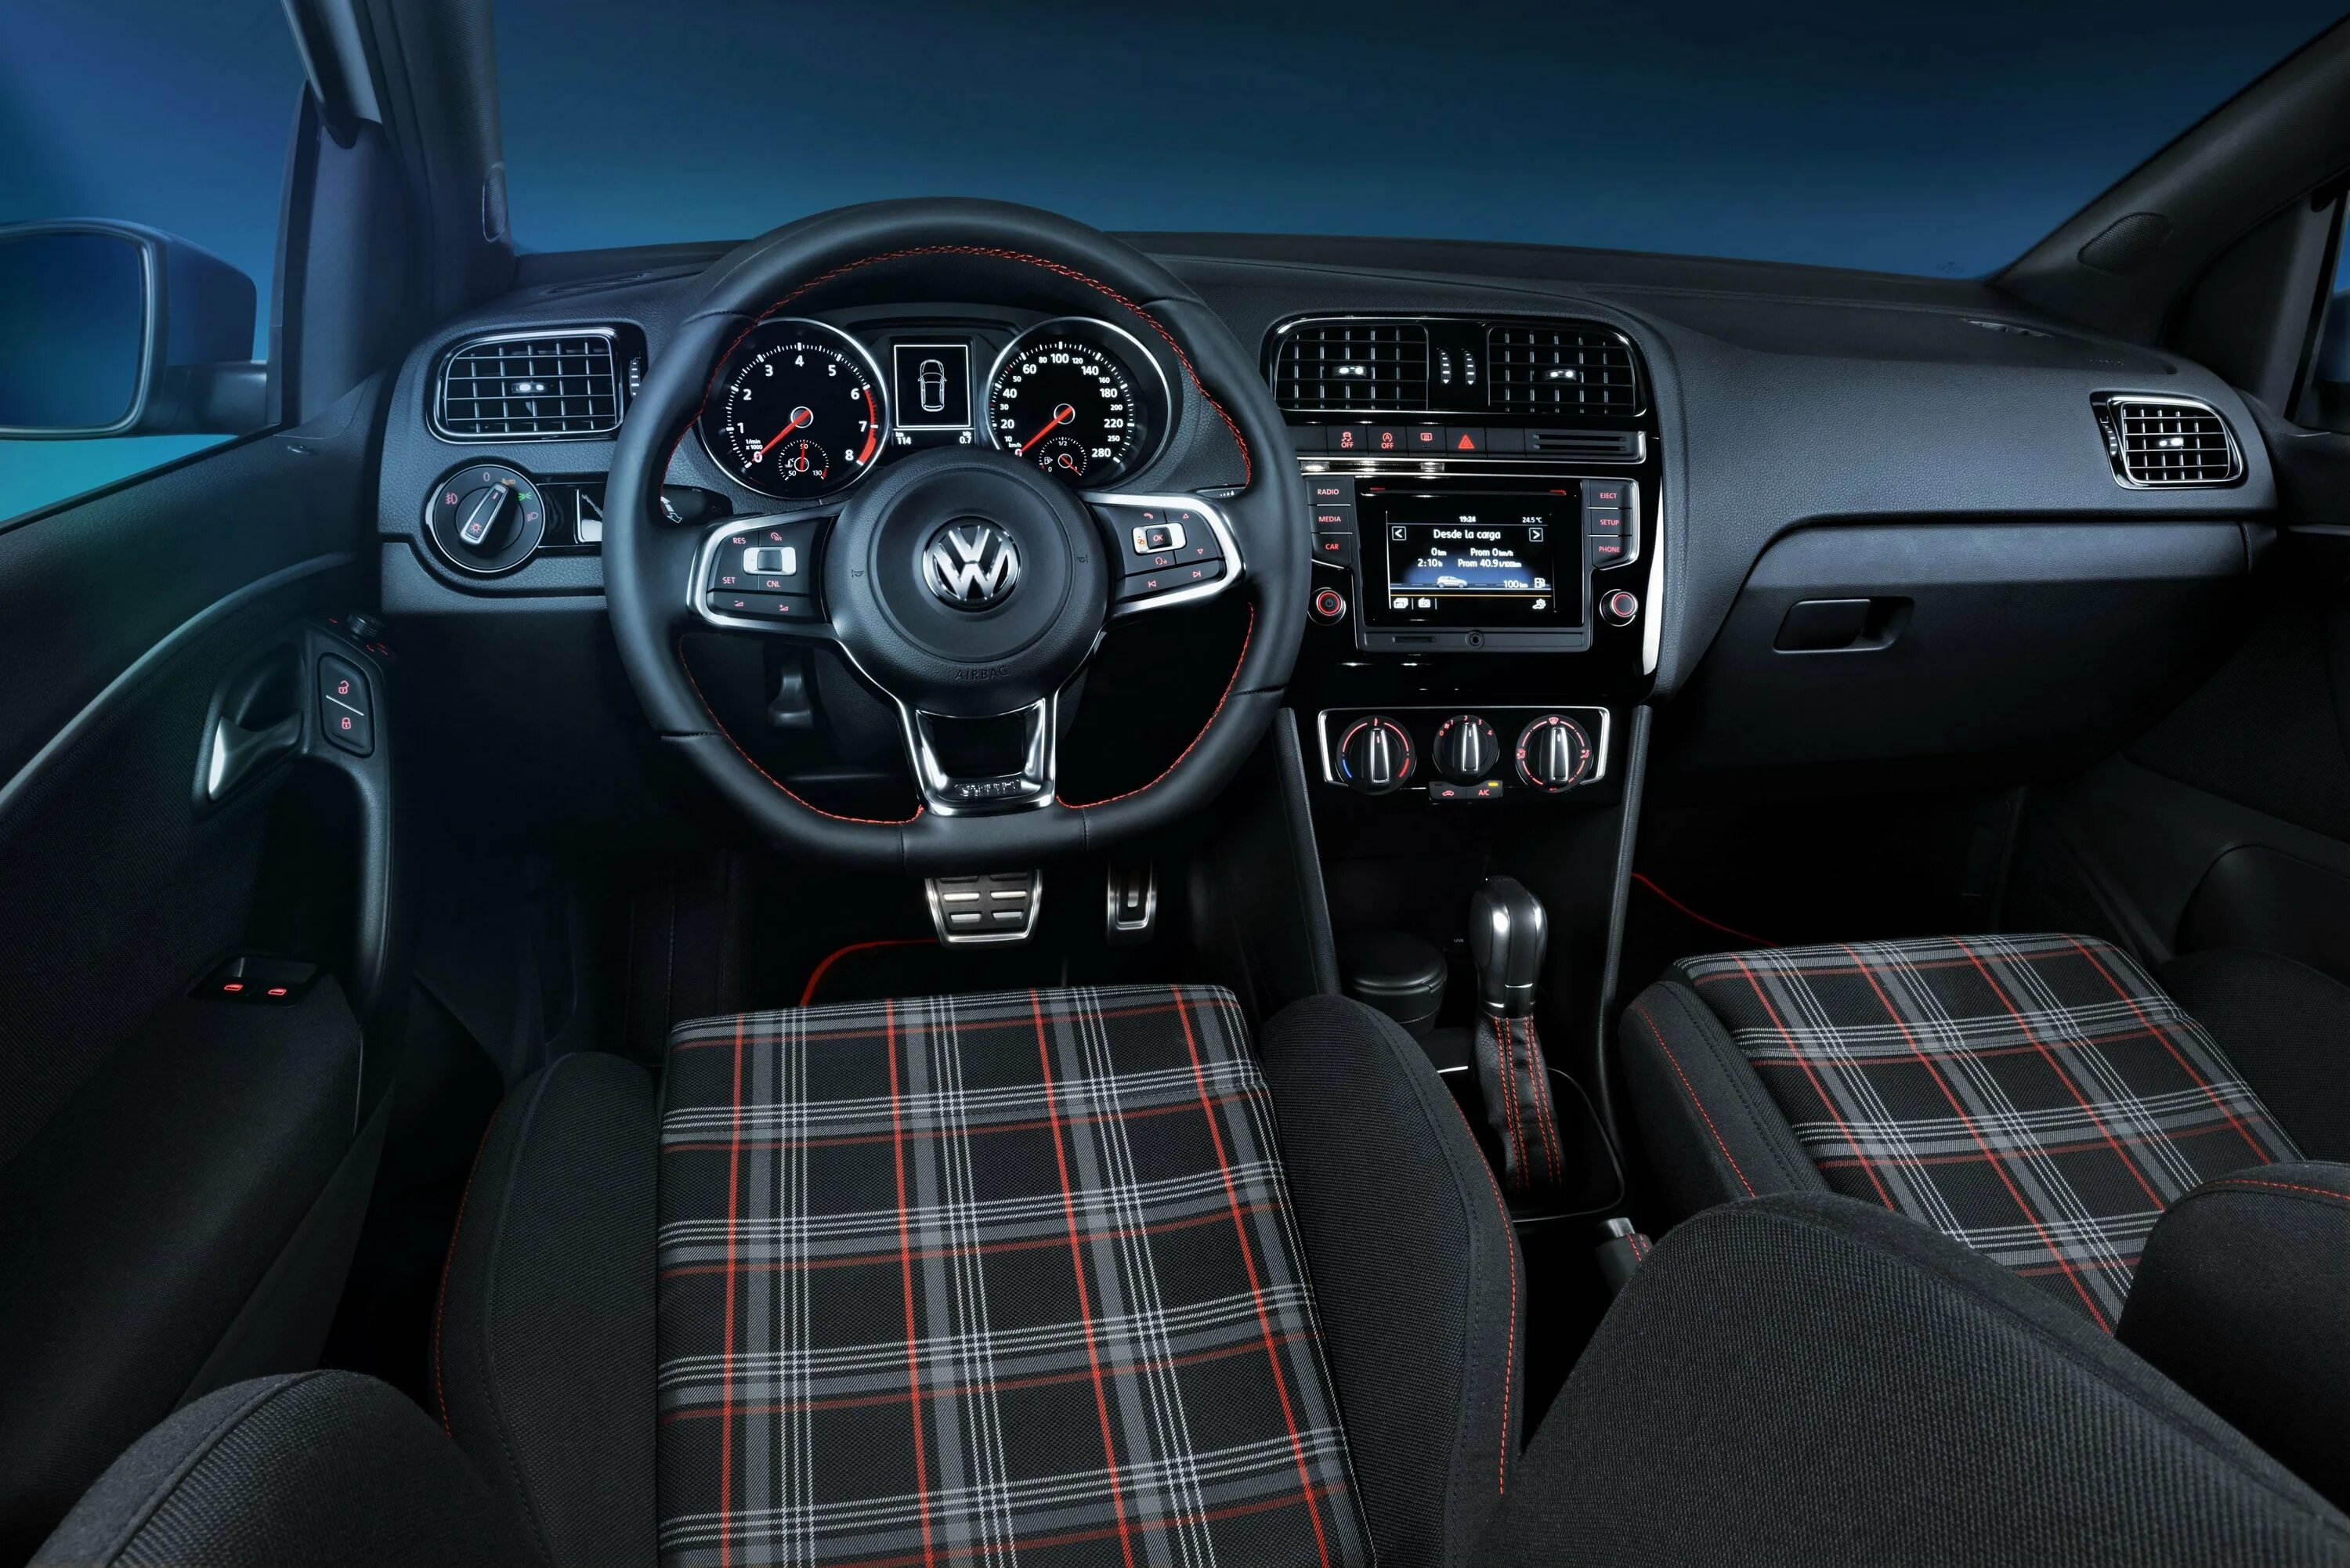 Торпеда Фольксваген поло 2016. VW Polo GTI 2016. VW Polo GTI 6c. VW Polo GTI салон. Поло торпедо